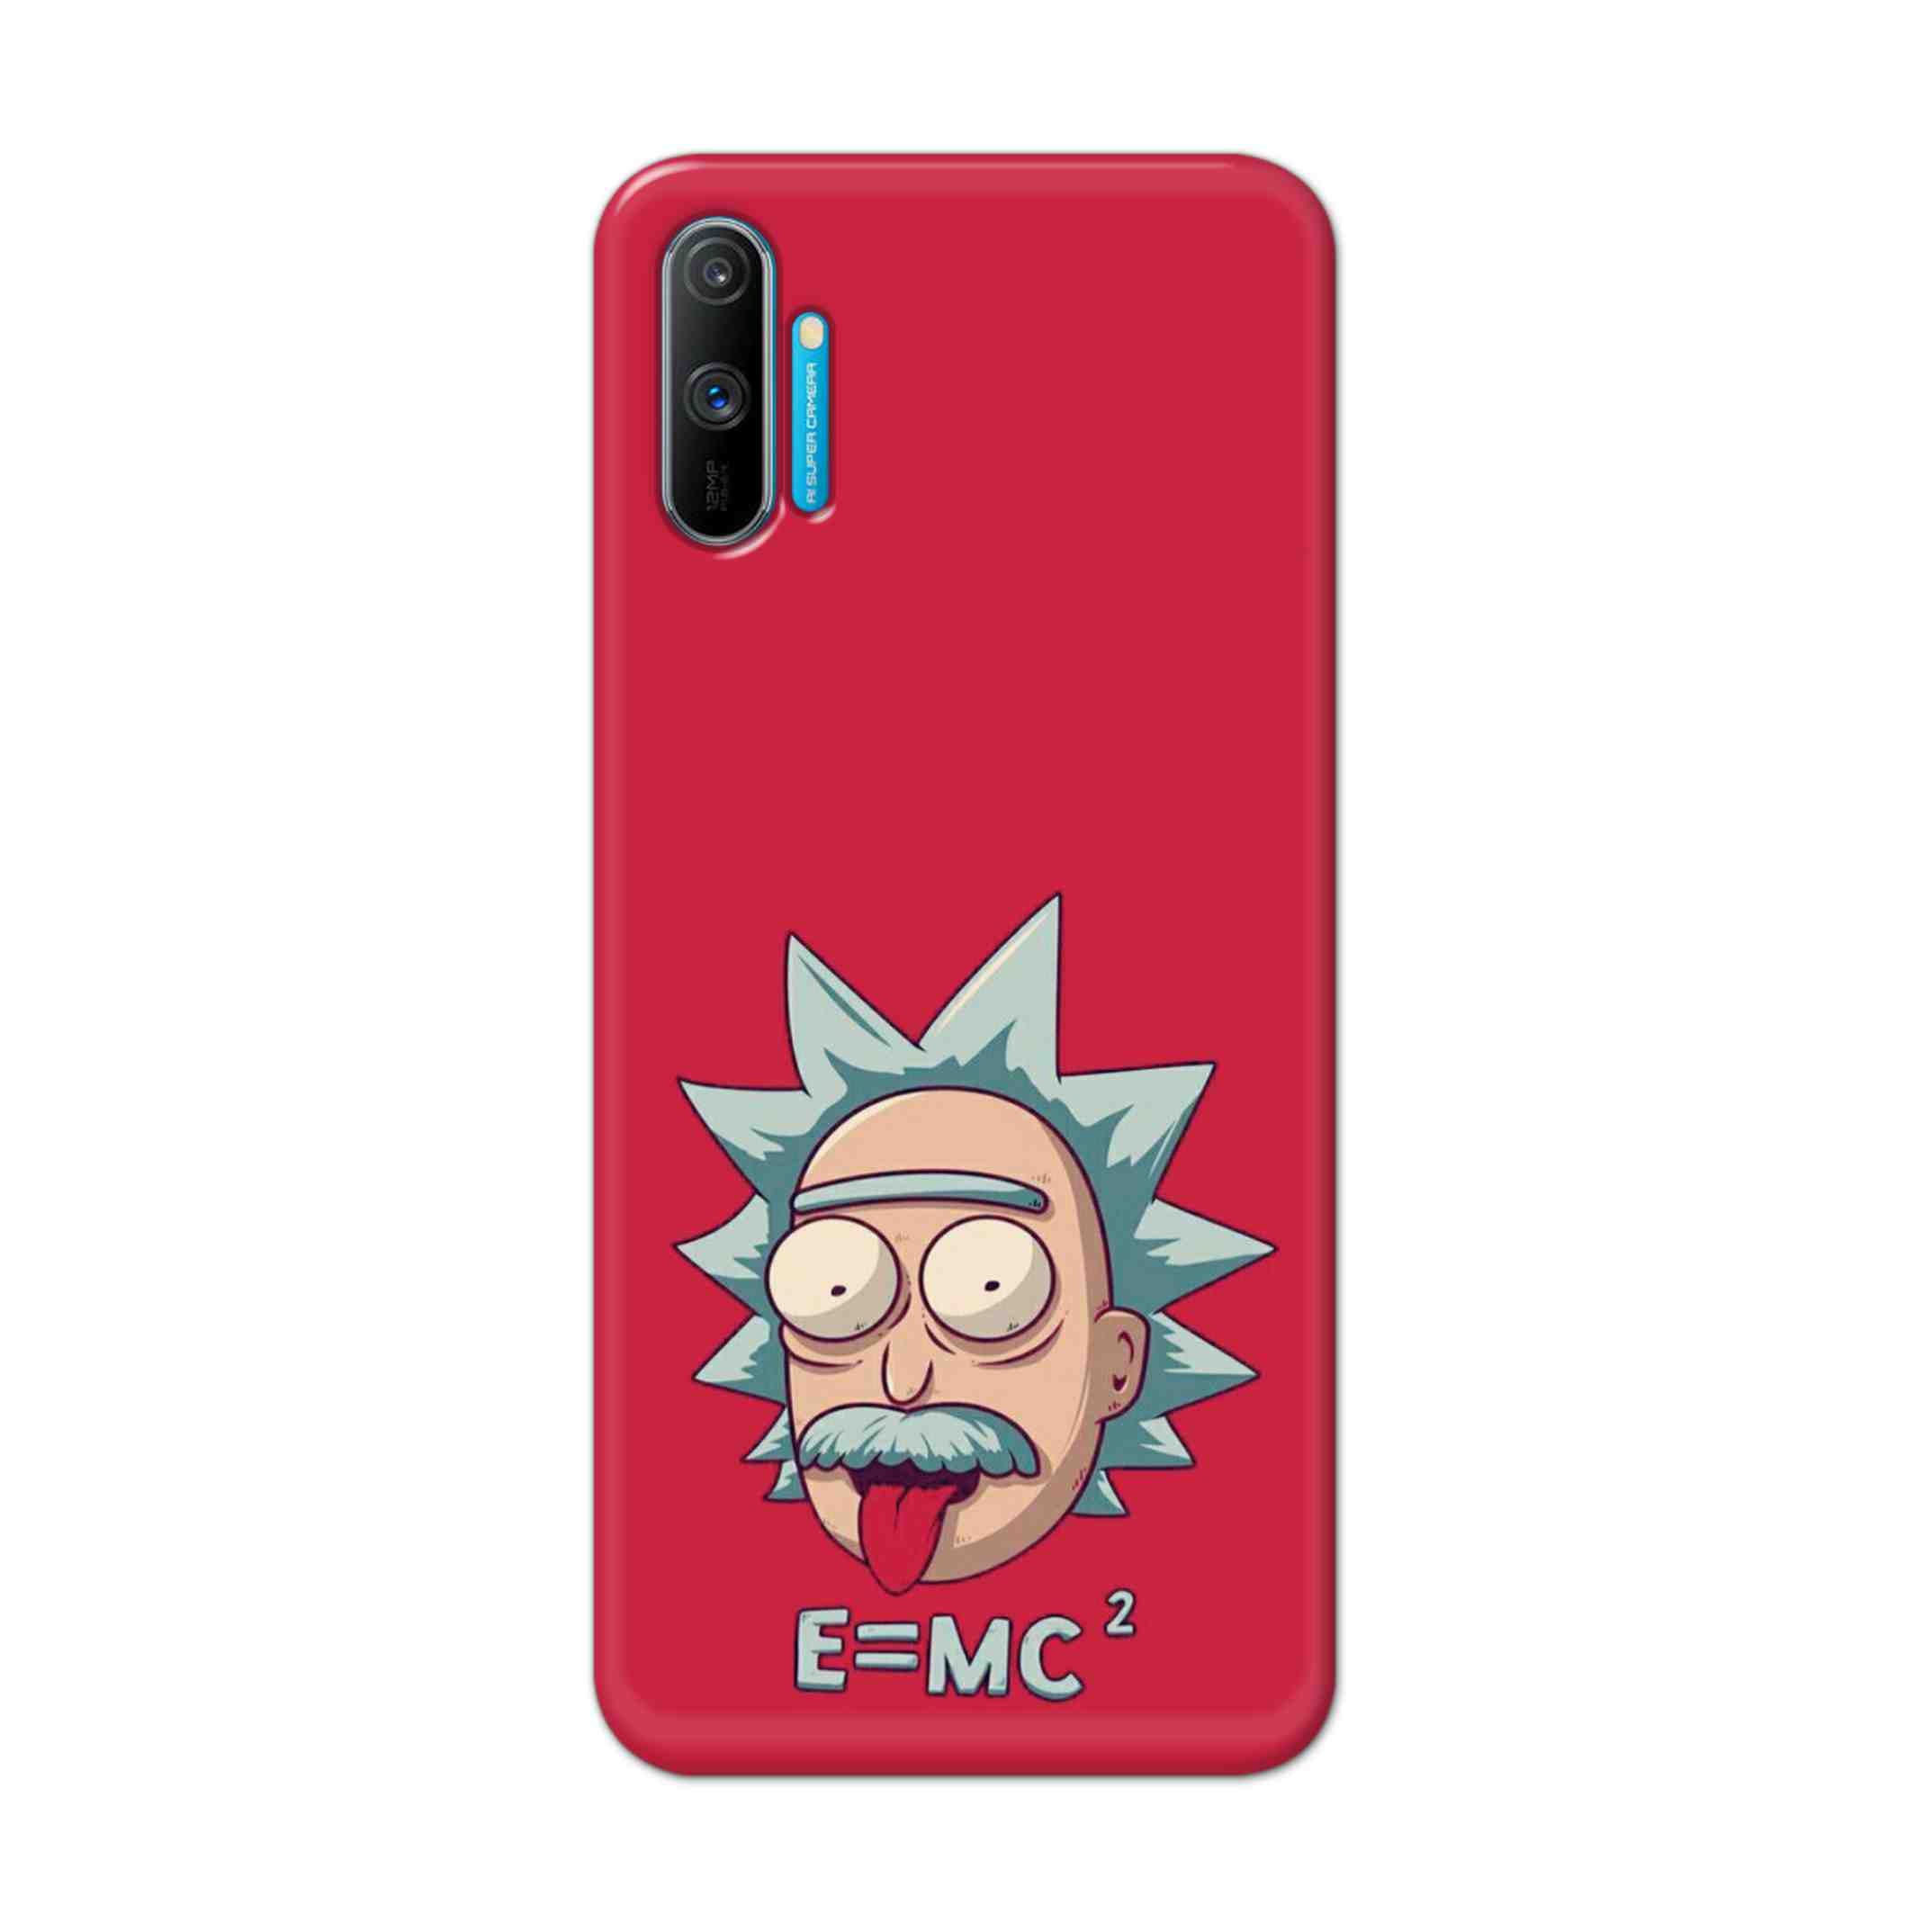 Buy E=Mc Hard Back Mobile Phone Case Cover For Realme C3 Online